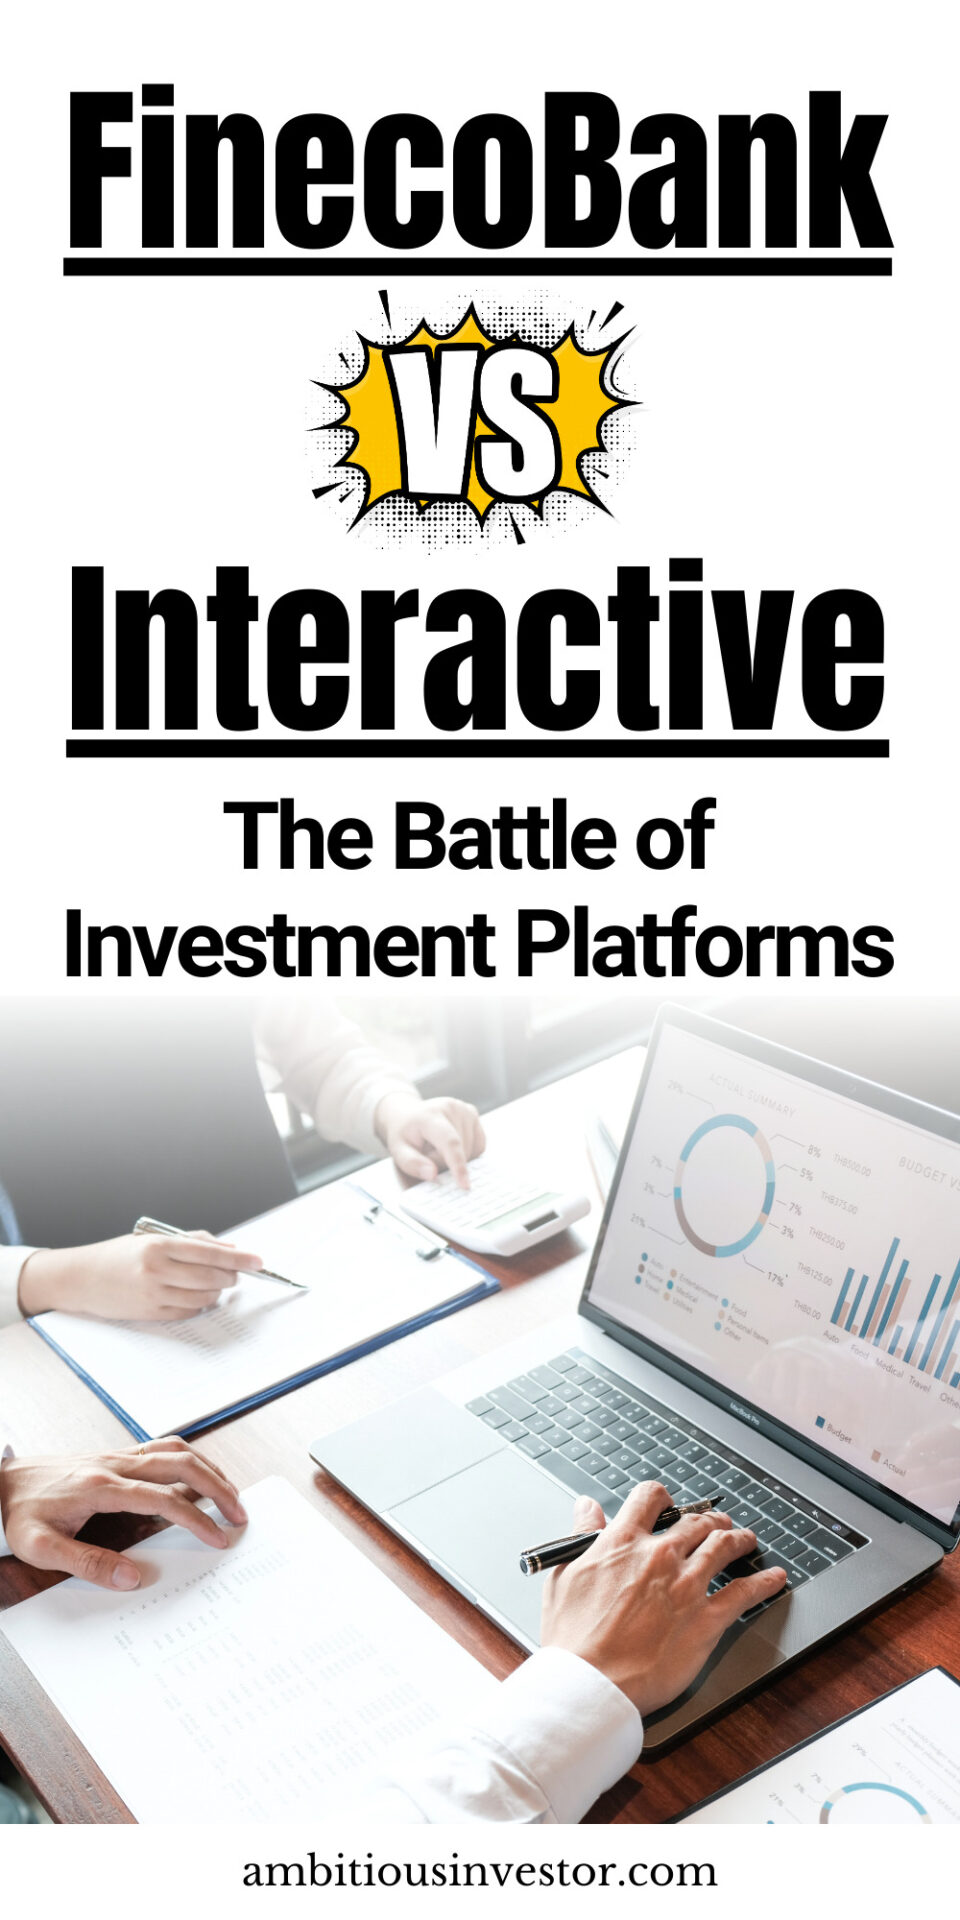 FinecoBank vs. Interactive Investor: A Detailed Comparison